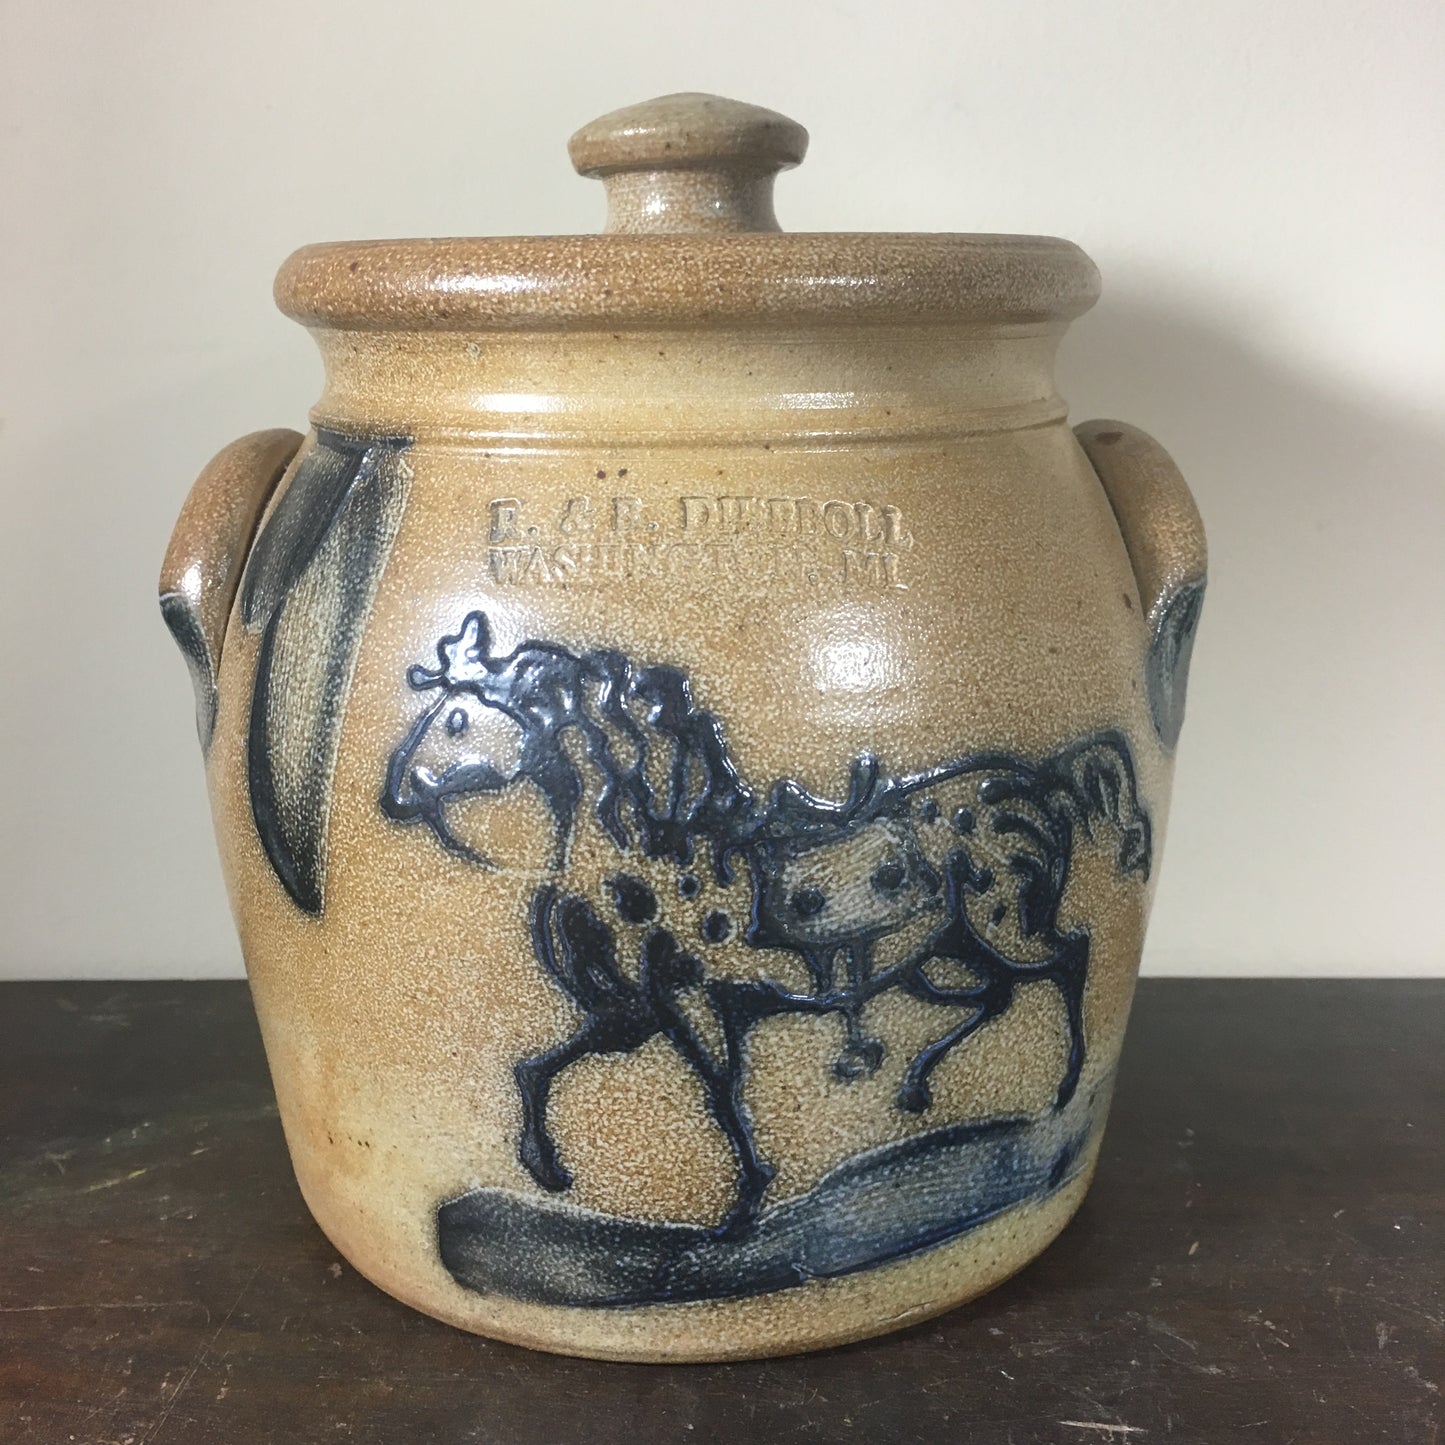 R. & B. Diebboll Lidded Stoneware Crock with Horse Motif